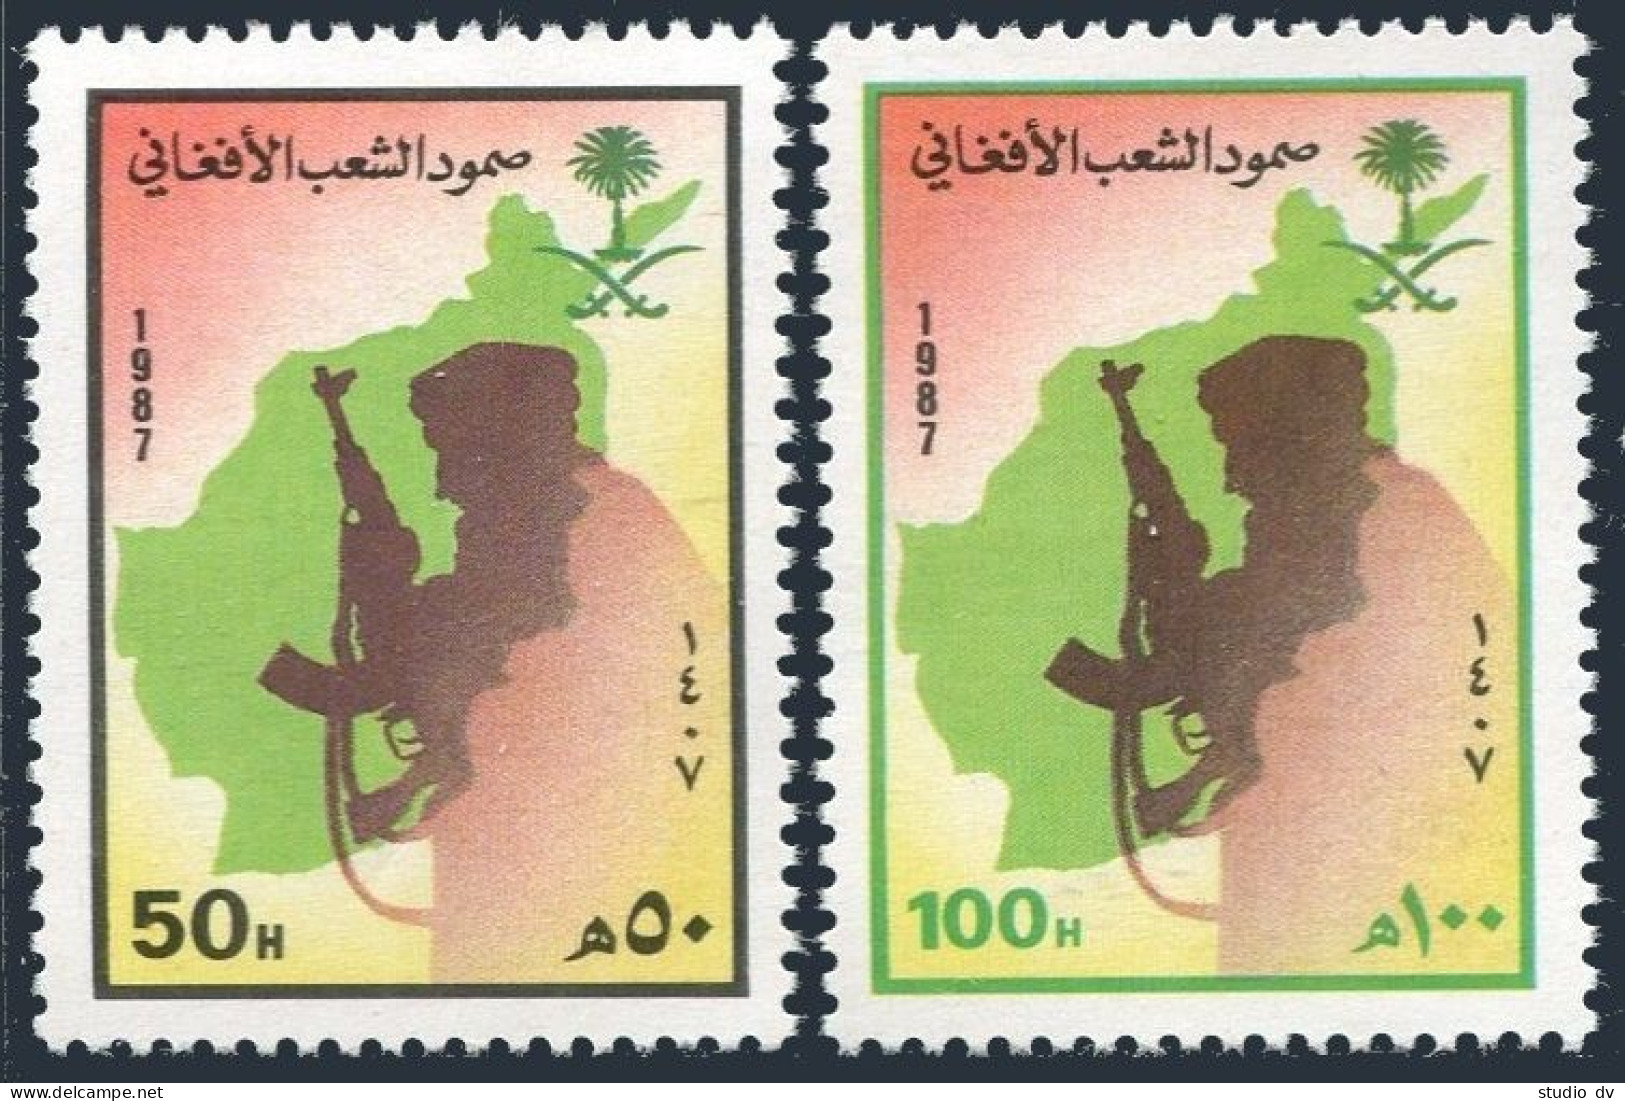 Saudi Arabia 1051-1052, MNH. Mi 883-884. Afghan Resistance Movement, 1987. Map. - Saudi Arabia